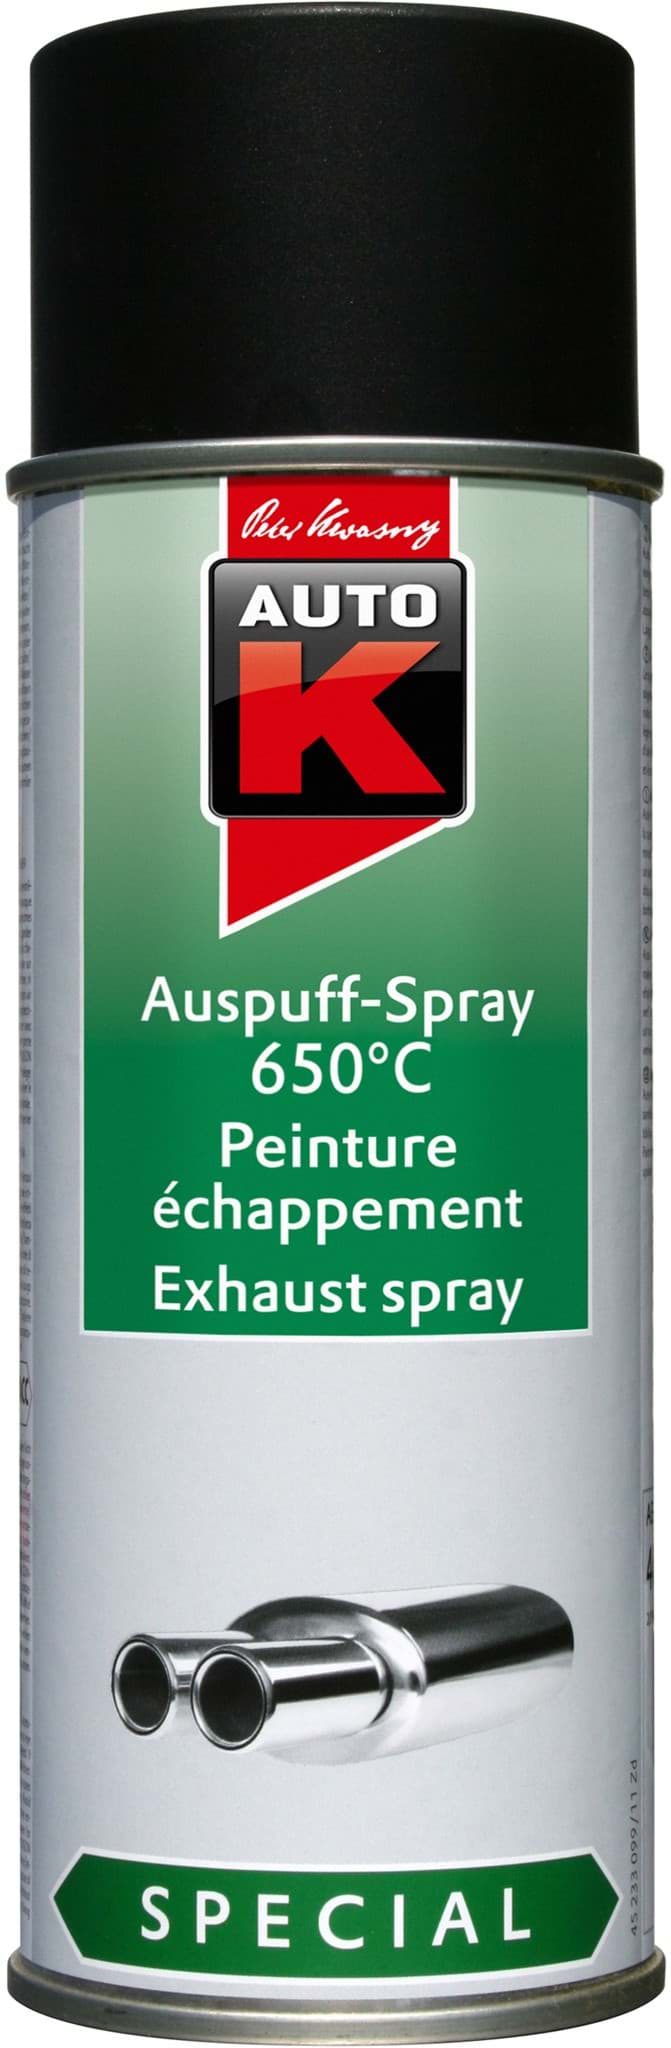 AutoK Auspuff Spray 650C° schwarz 400ml 233099  resmi